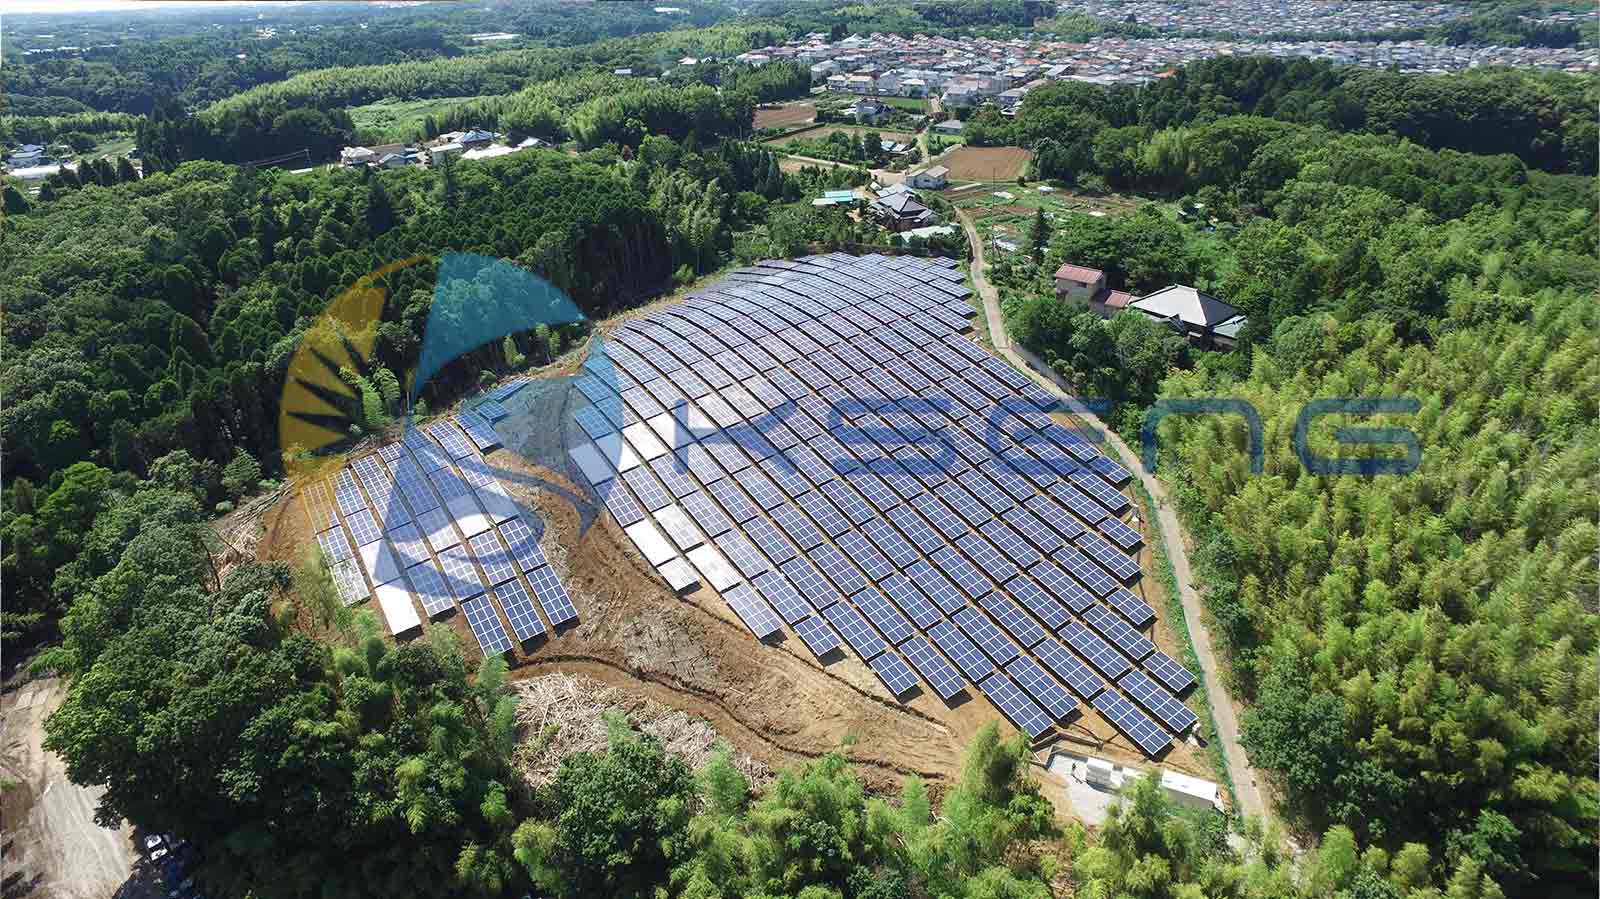  Chiba-ken zonnepaneel grondmontagesysteem 1MW 